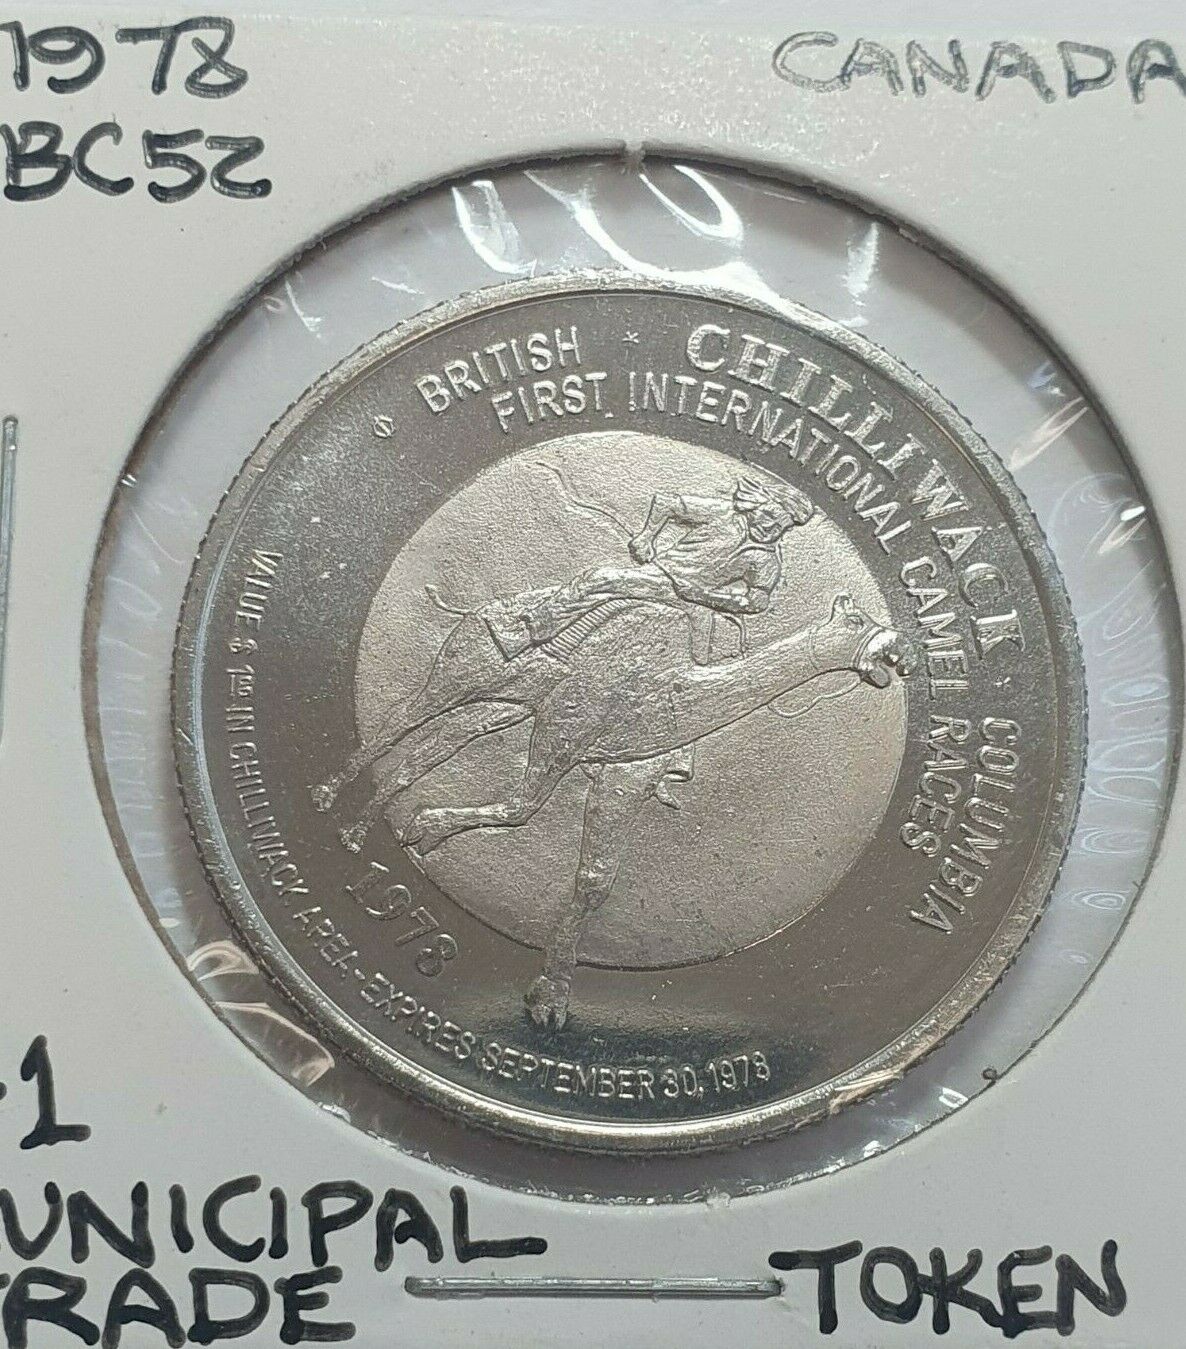 1978 Chilliwack British Columbia $1 Camel Races dollar token Proof like